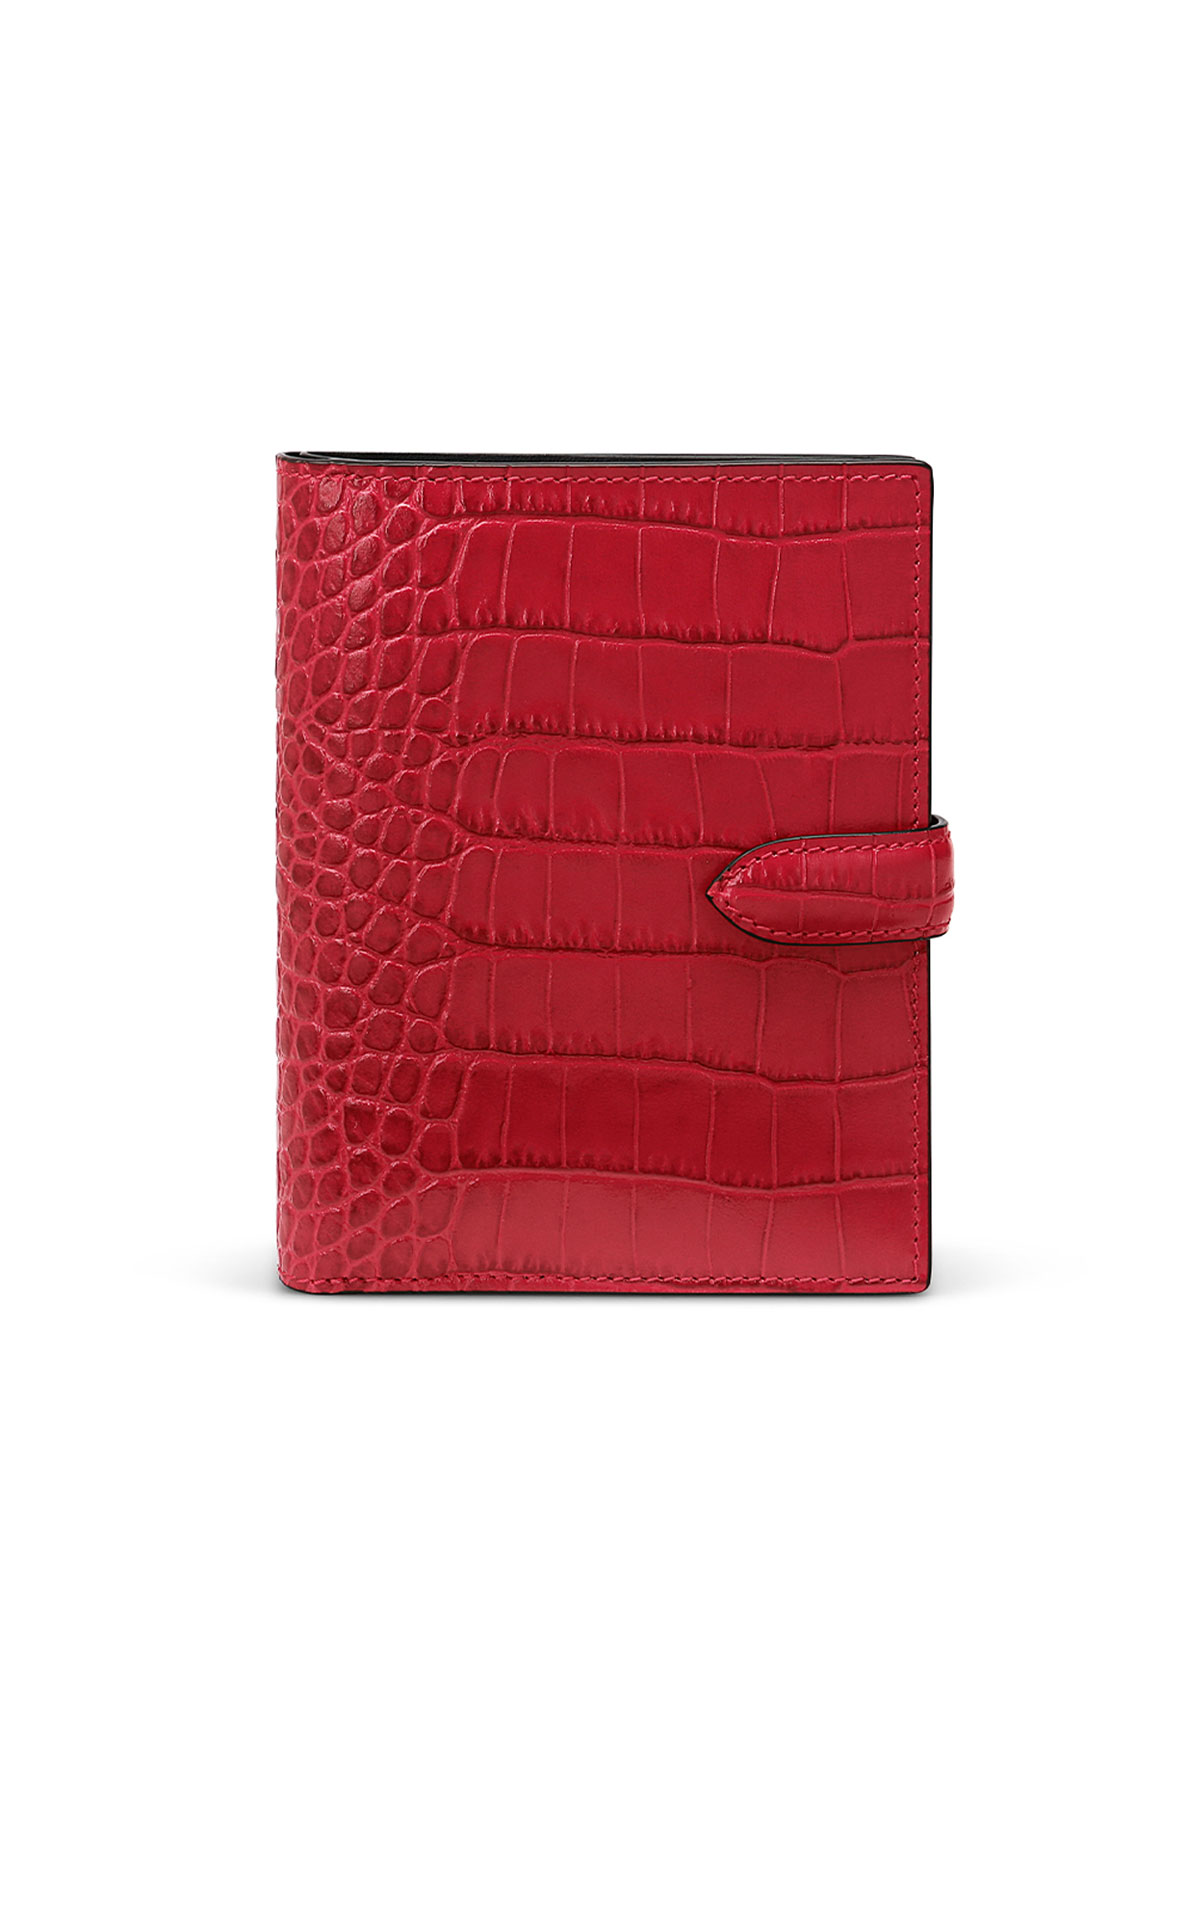 Smythson Mara pocket tab wallet red from Bicester Village